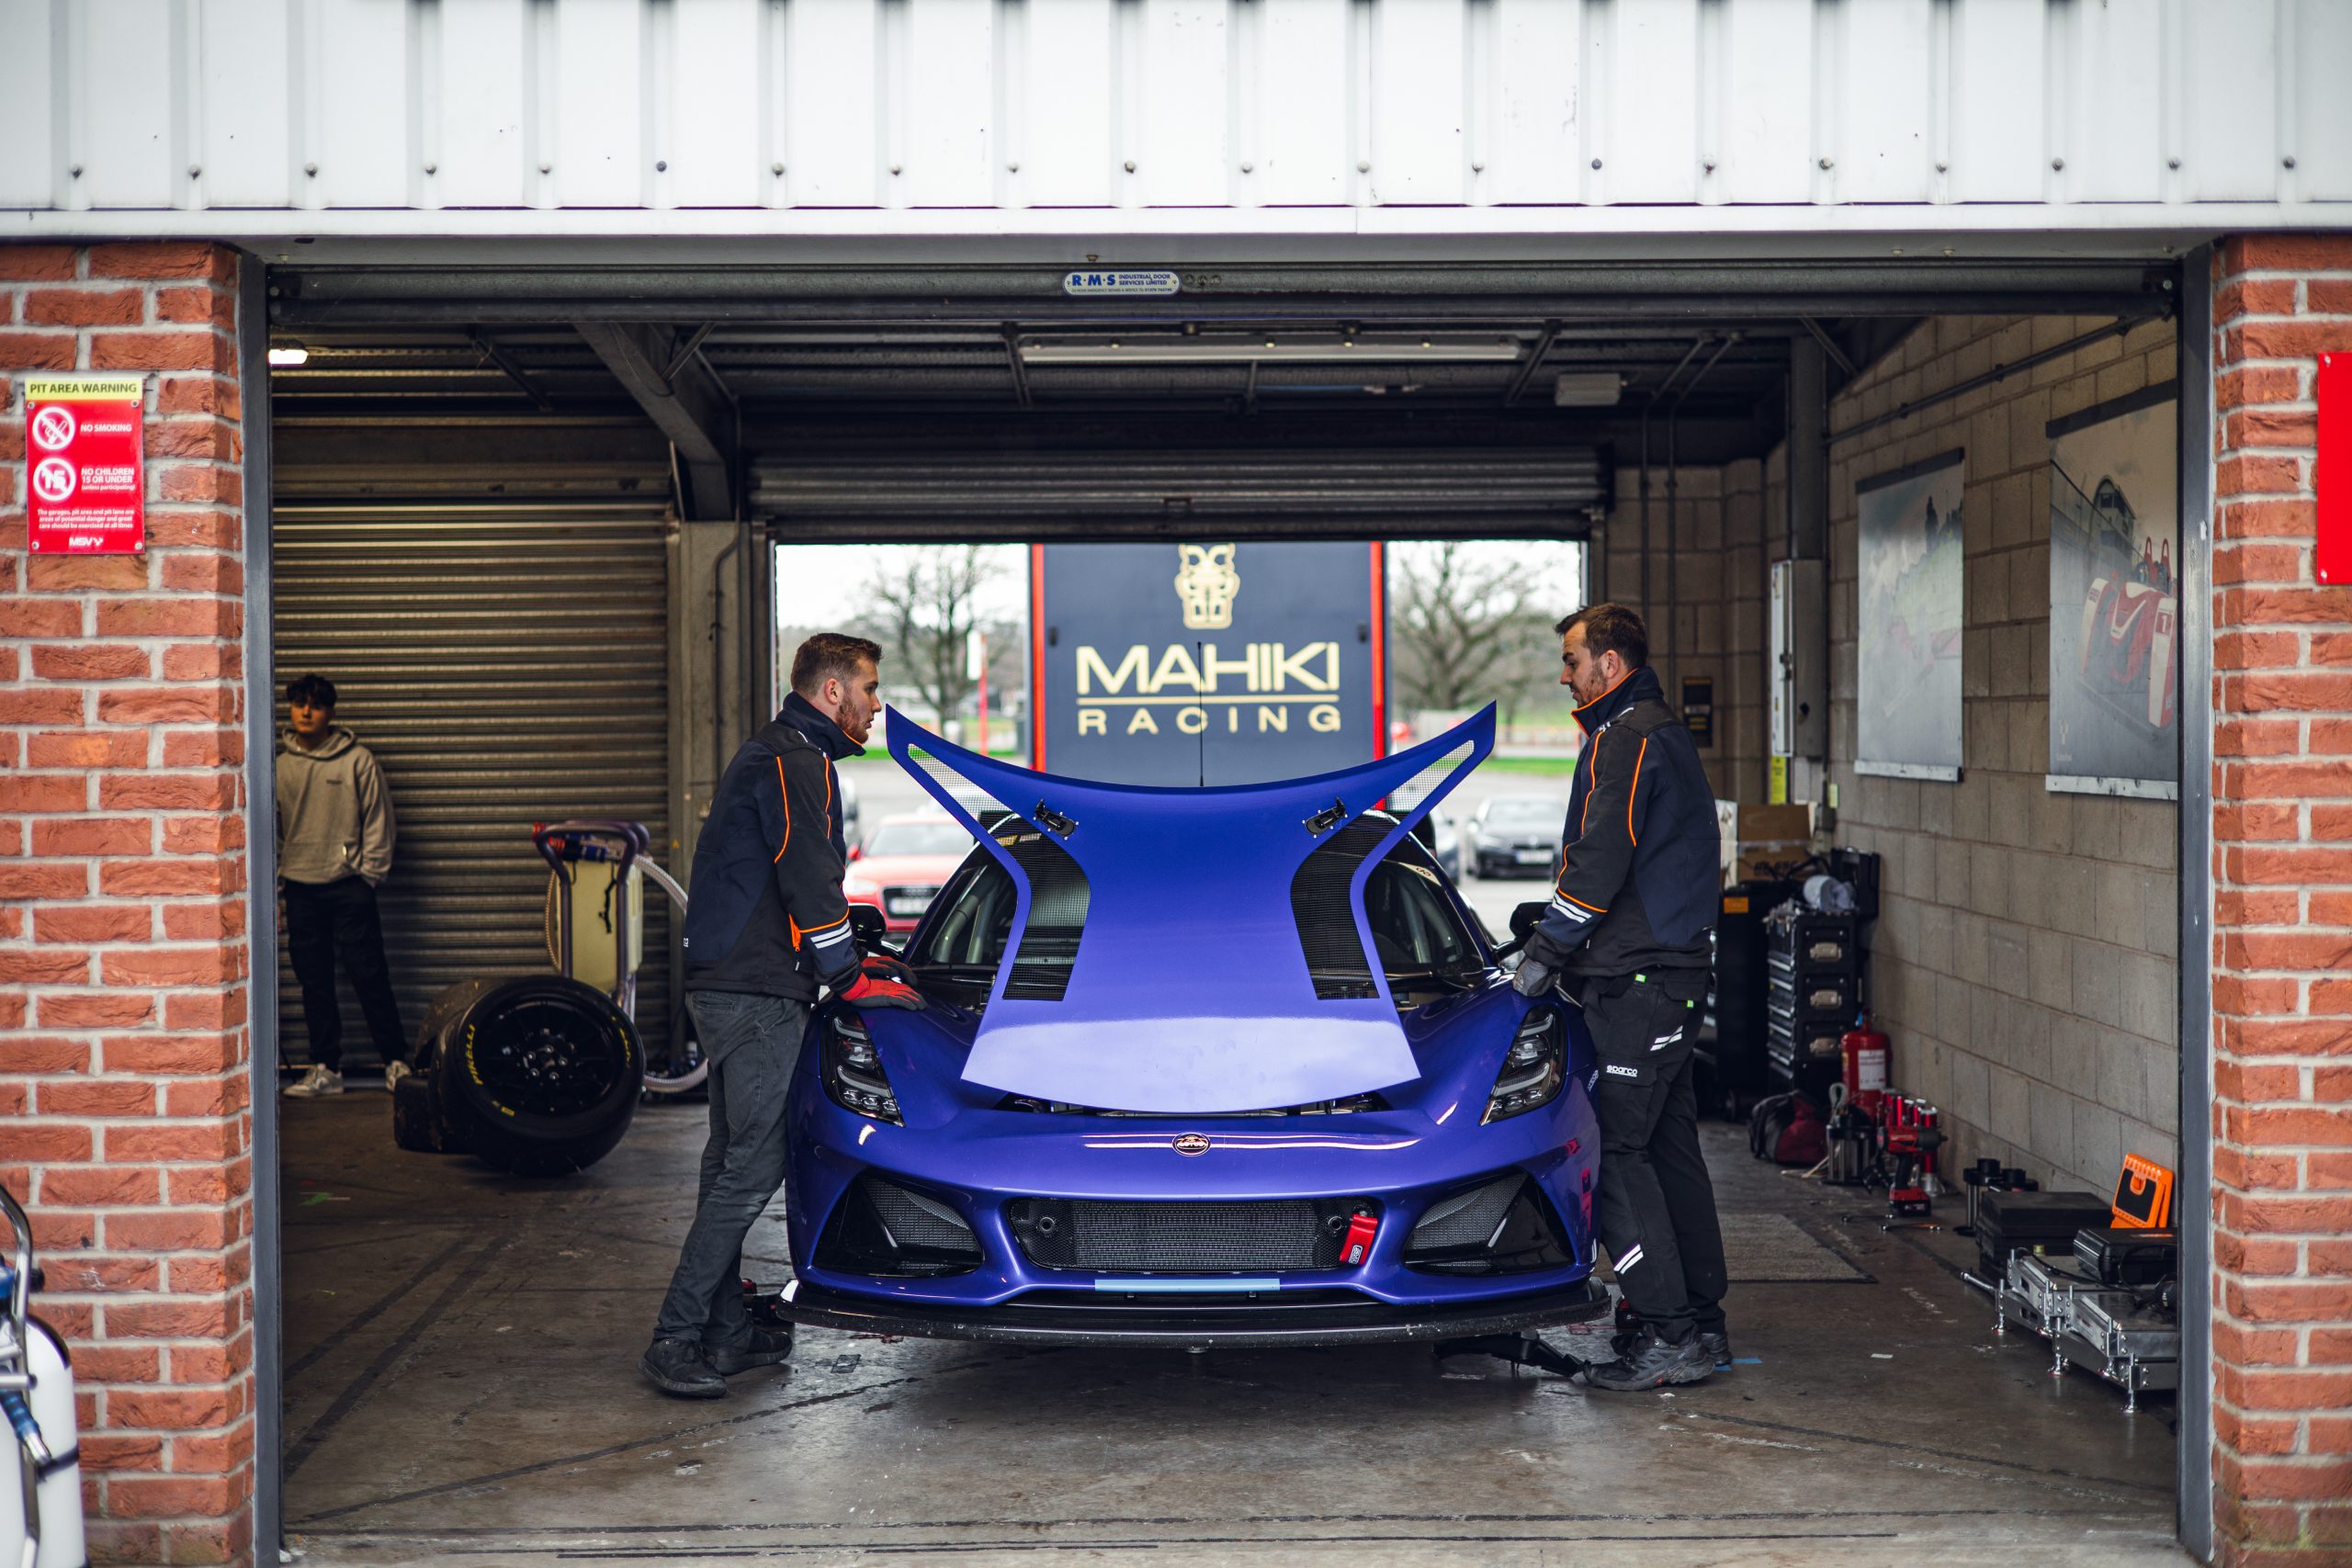 Lotus GT4 with front hood open in garage